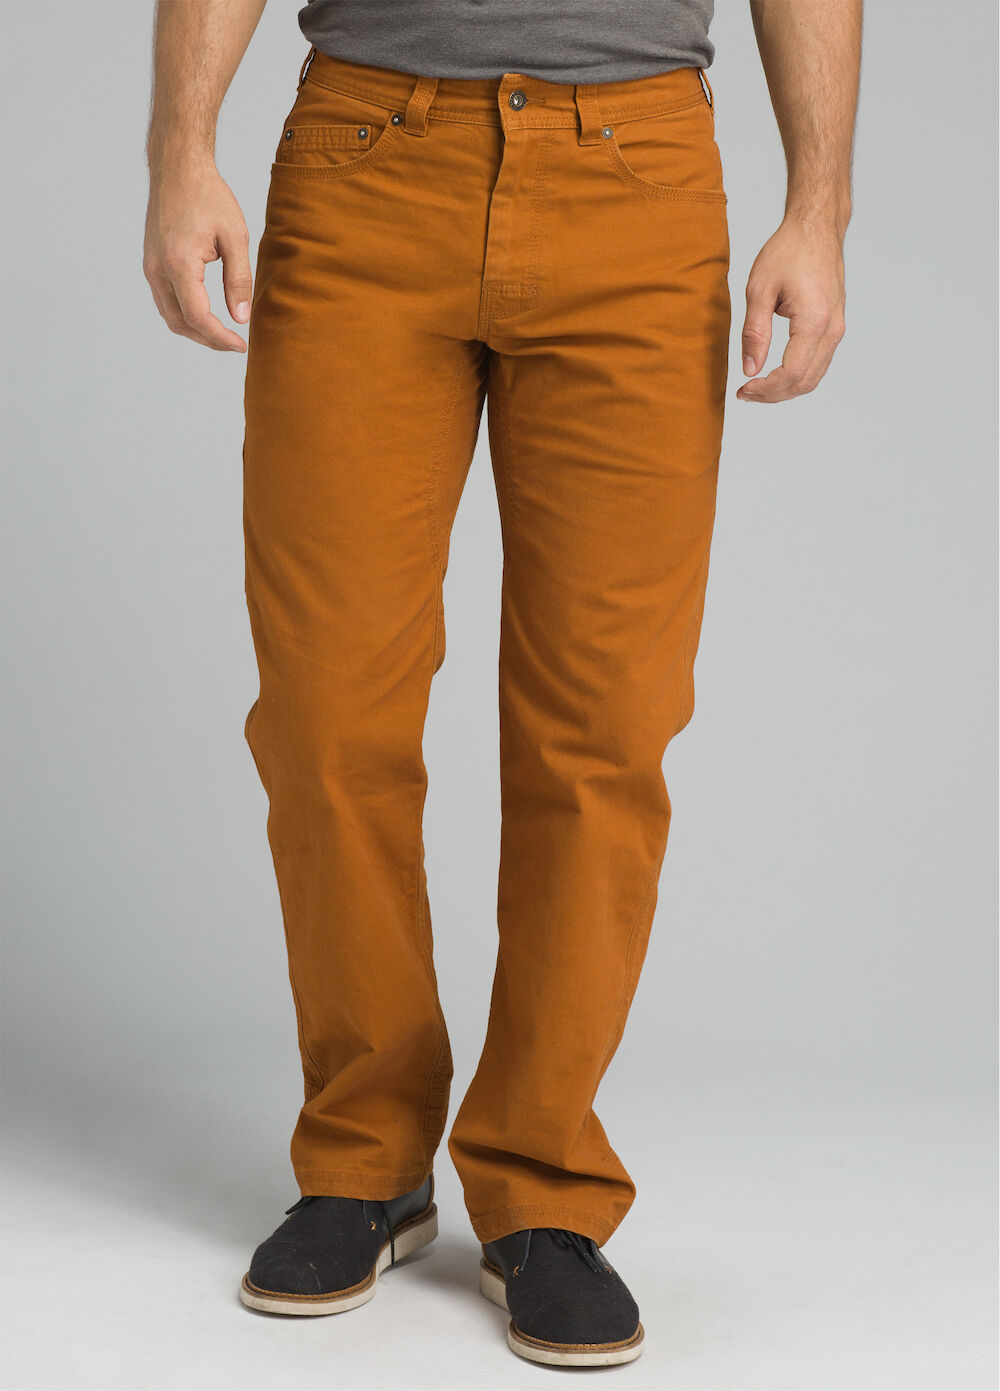 Prana - Bronson Pant 32 Inseam - Outdoor trousers - Men's